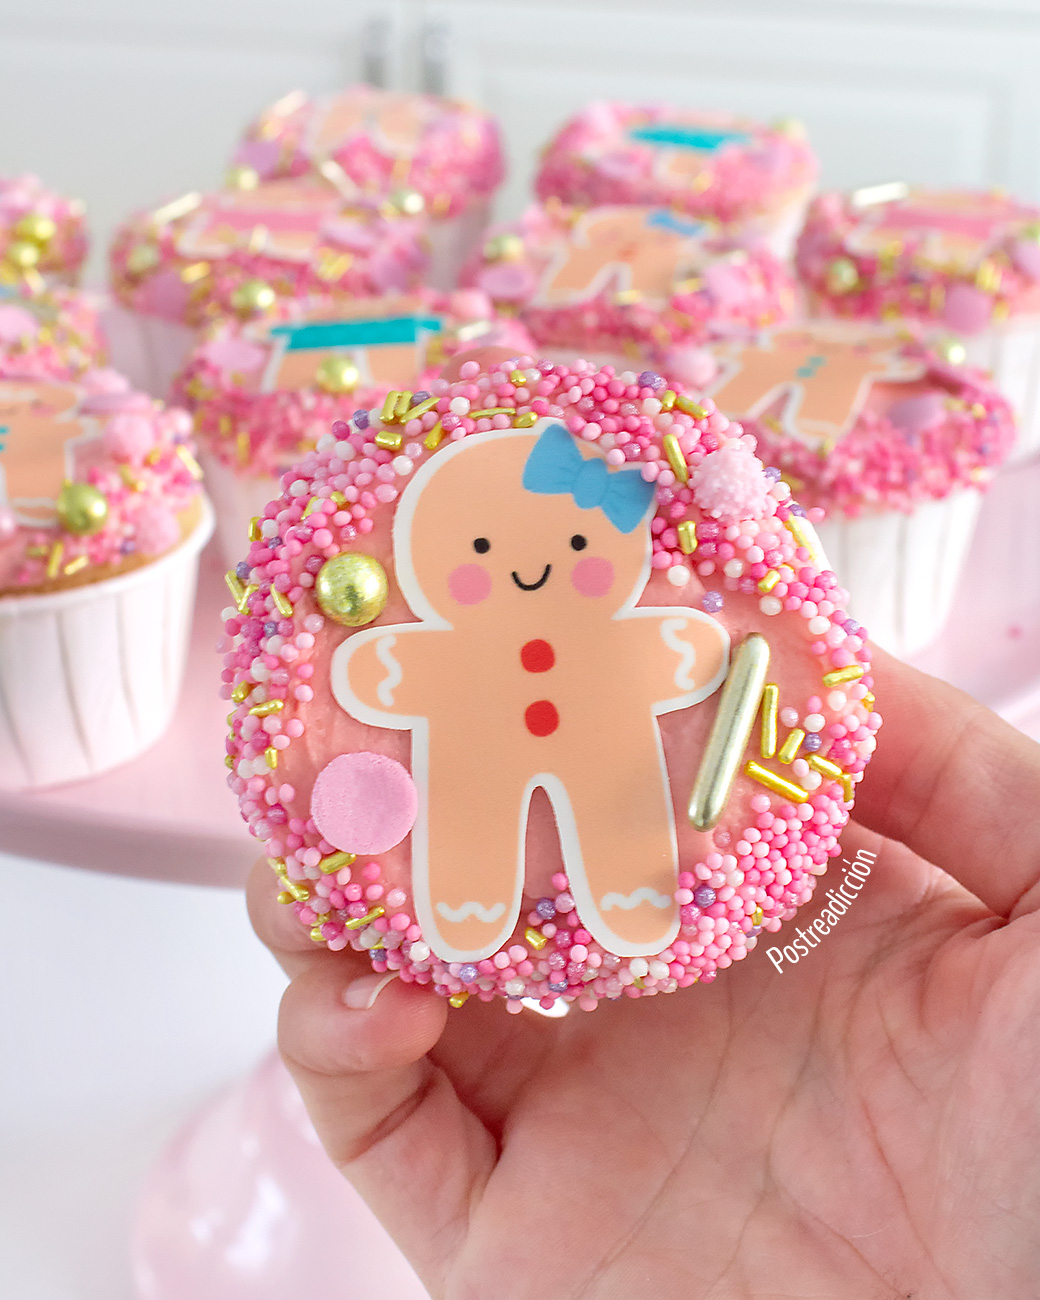 Imagen de producto: https://tienda.postreadiccion.com/img/articulos/secundarias14244-sprinkles-medley-glamour-pink-65-g-funcakes-4.jpg